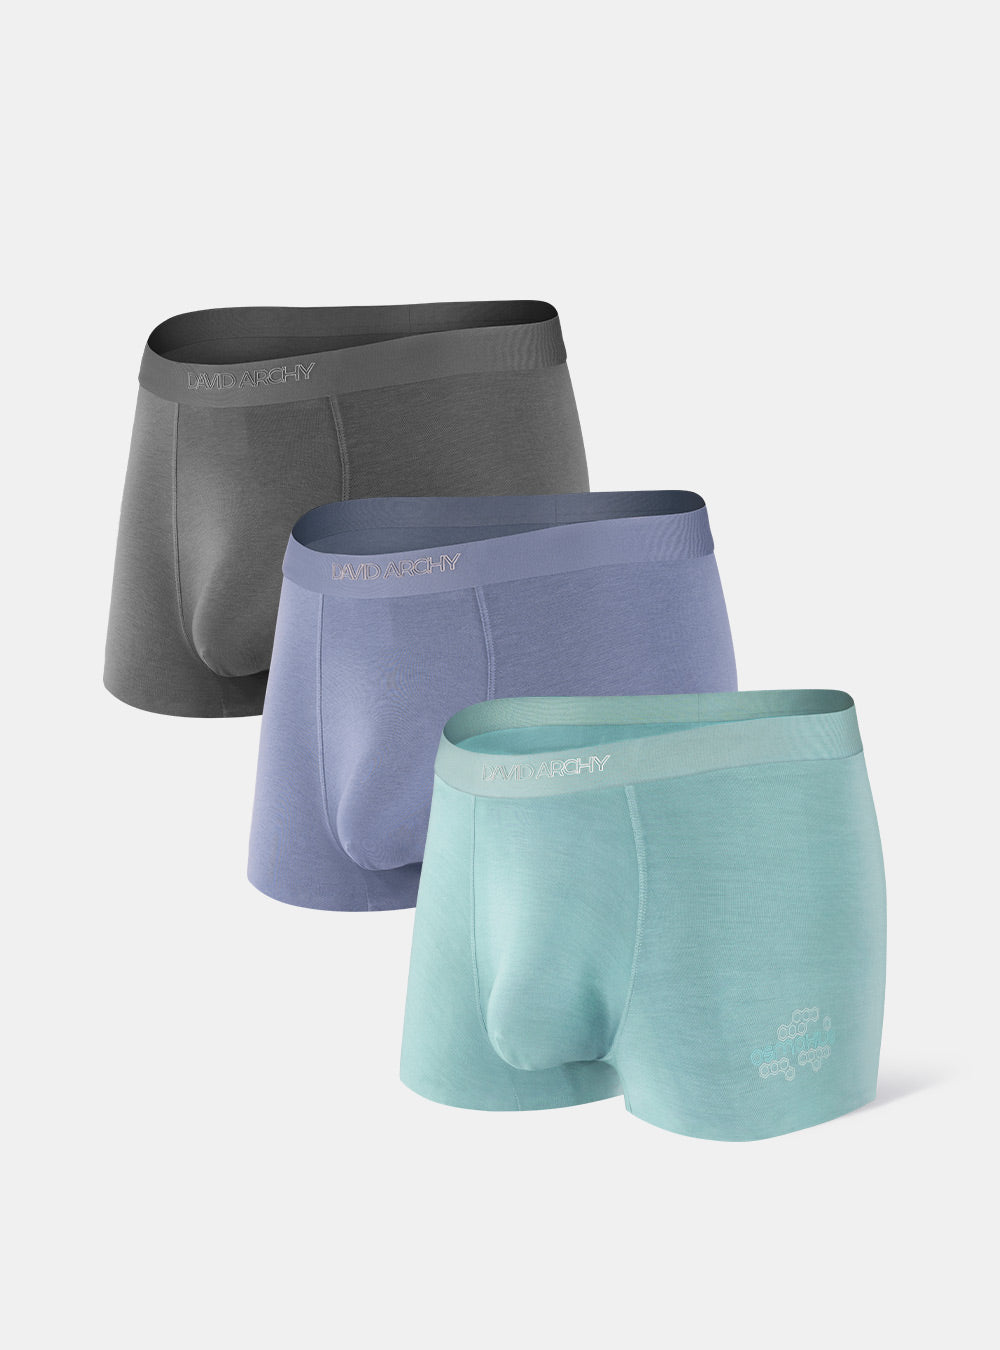 Buy DAVID ARCHY Men's Underwear Premium Cotton Boxer Briefs Dual